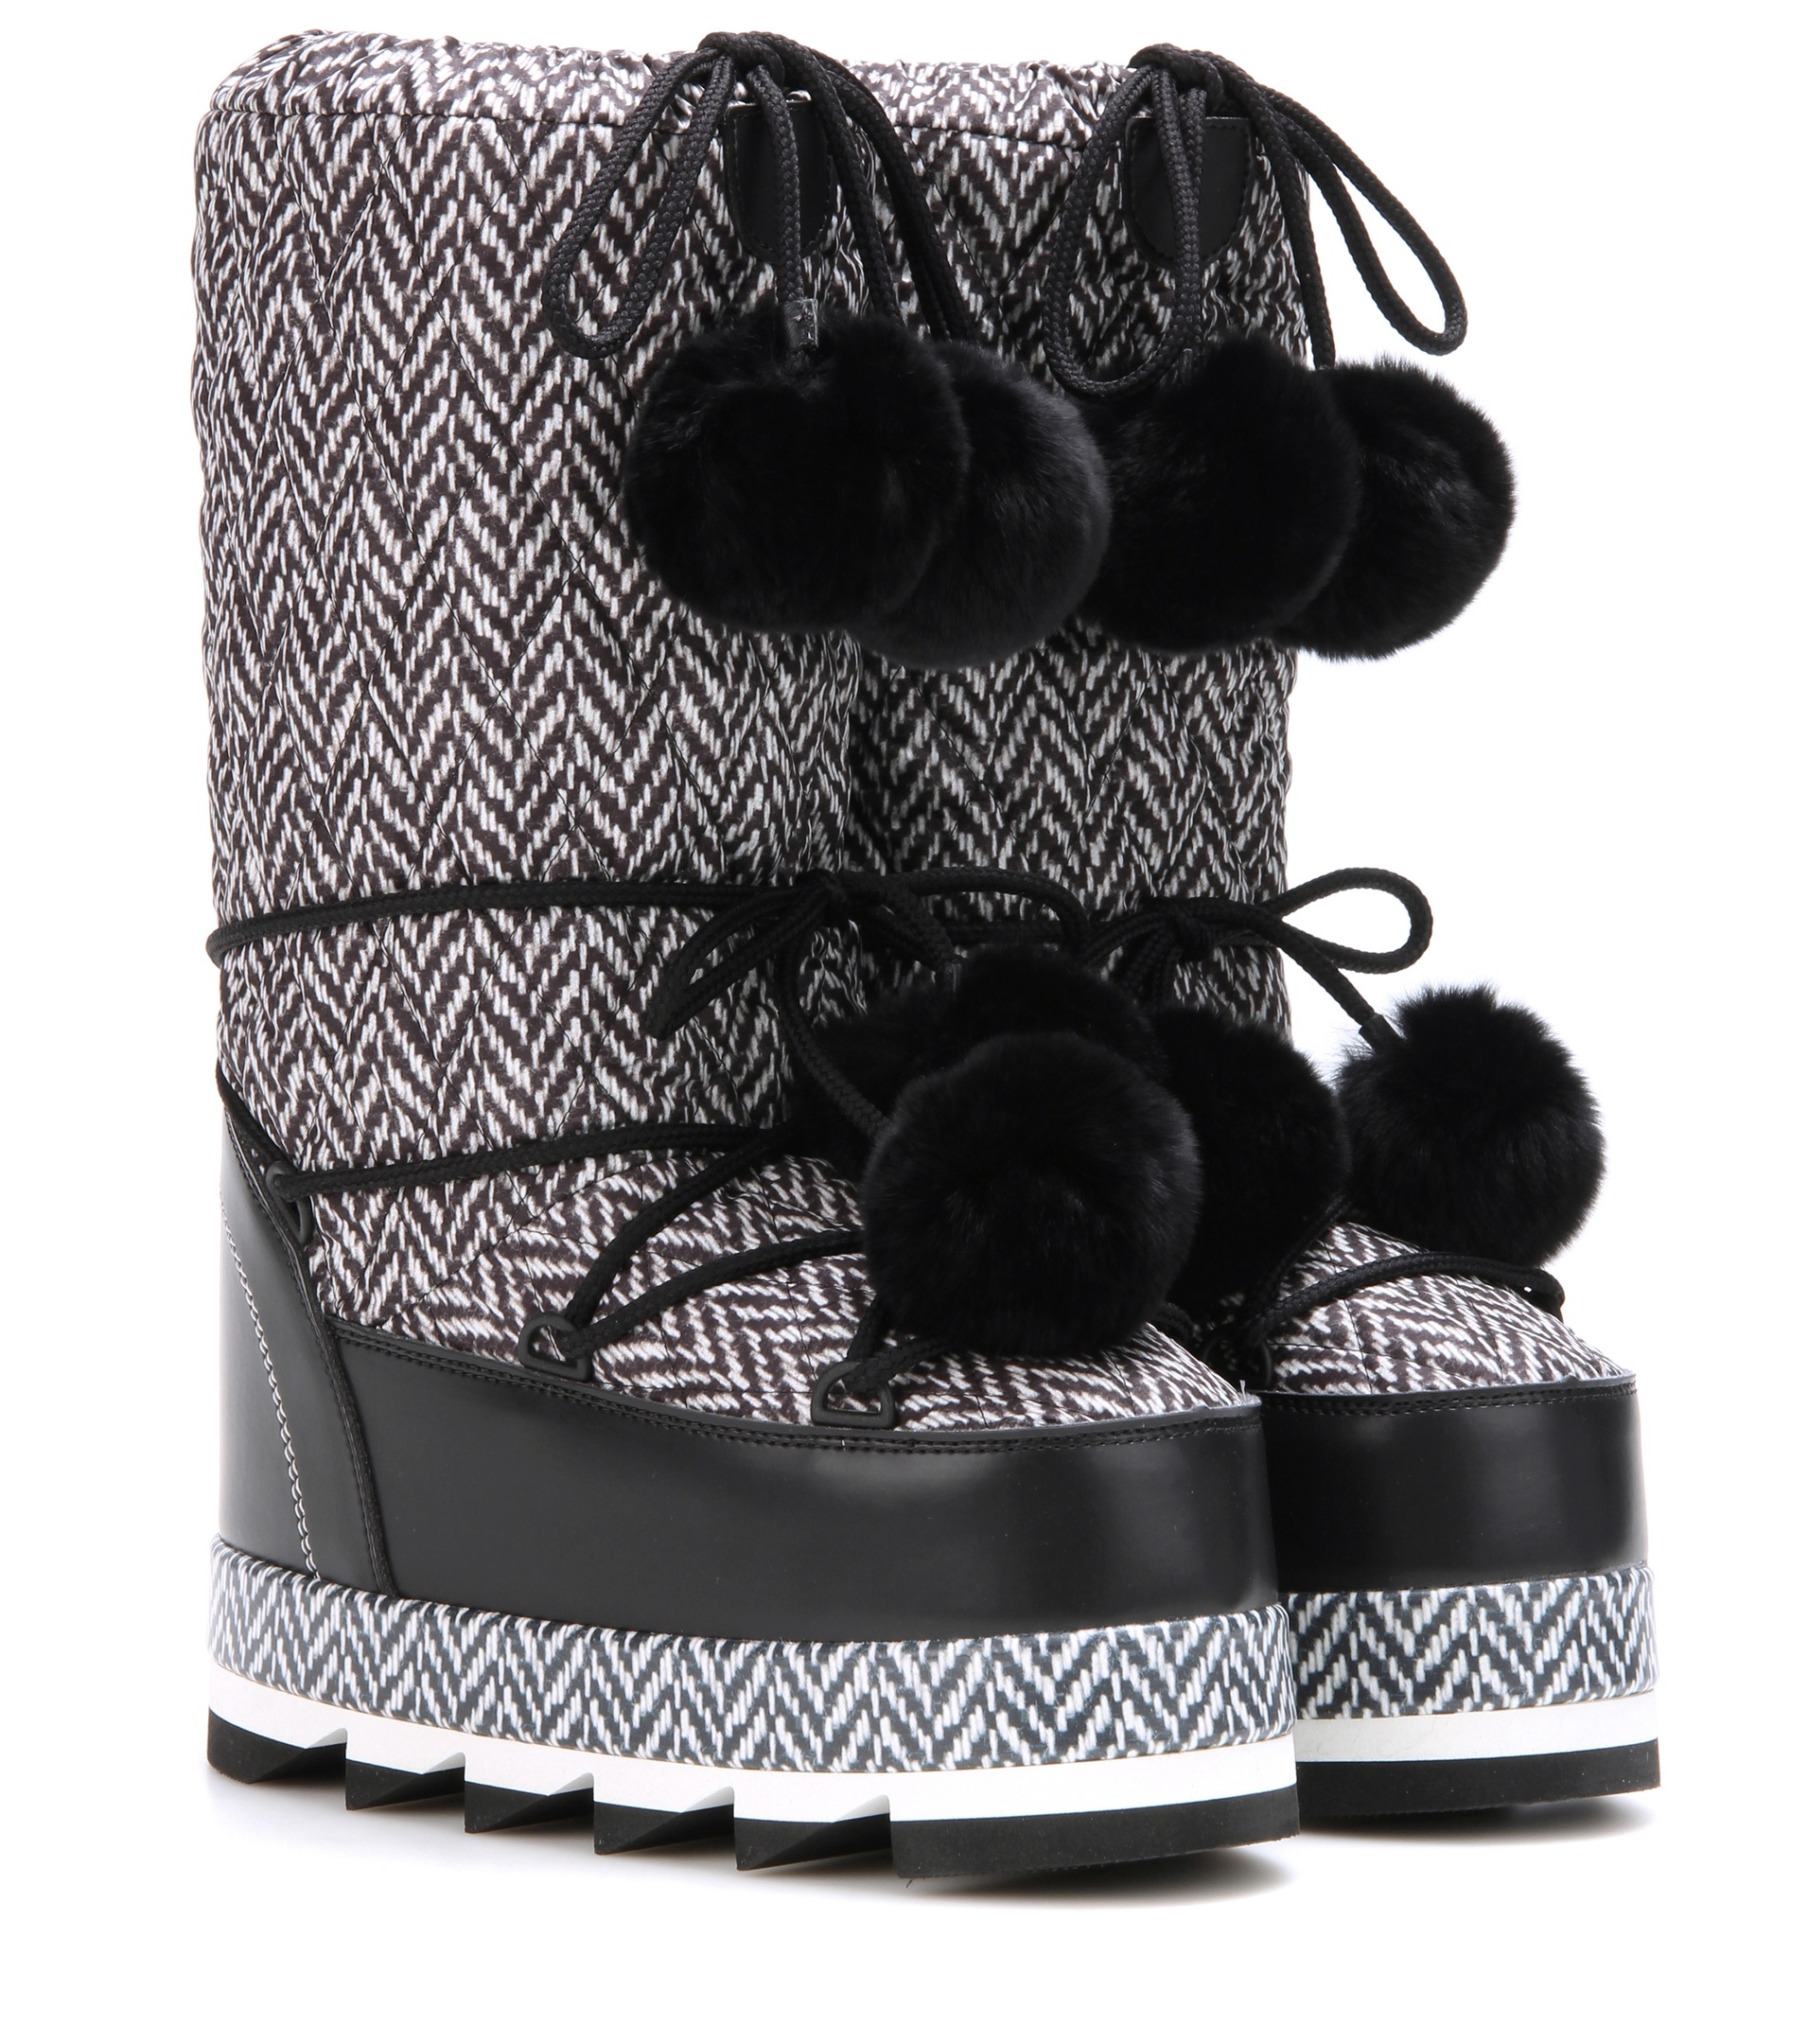 Dolce & Gabbana Black & White Fur Pom Pom Moon Boots - Lyst